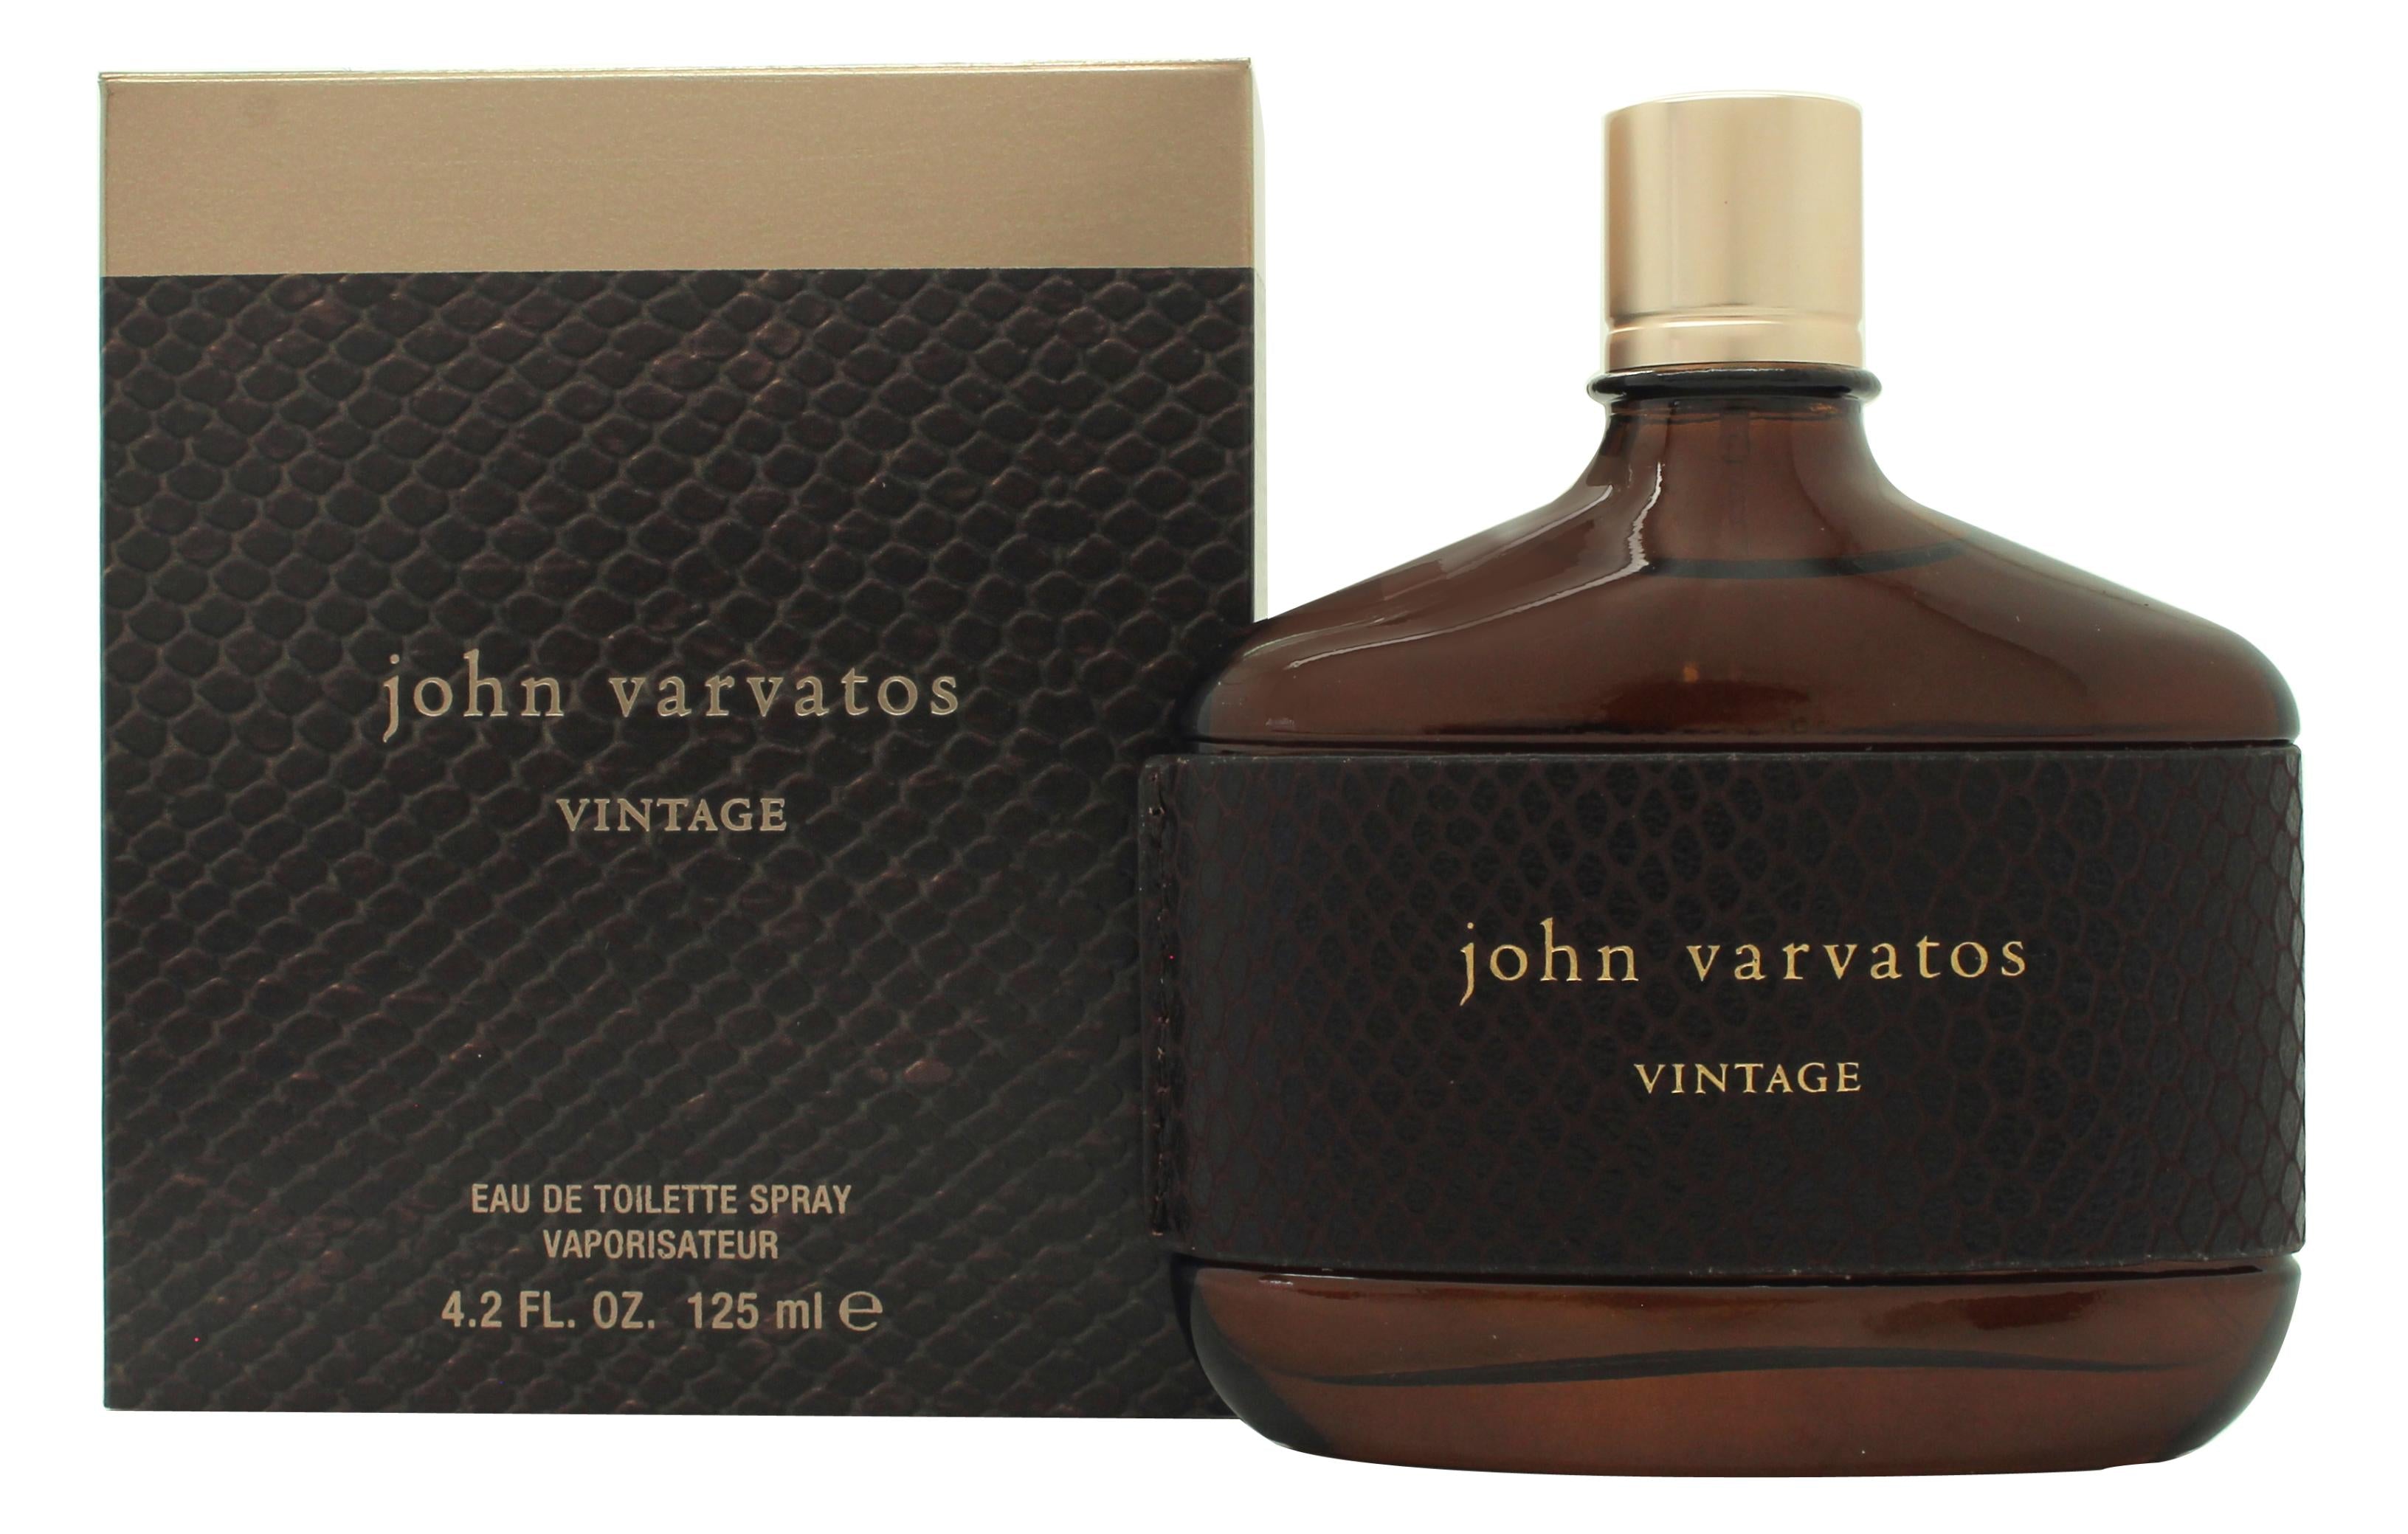 View John Varvatos Vintage Eau de Toilette 125ml Spray information